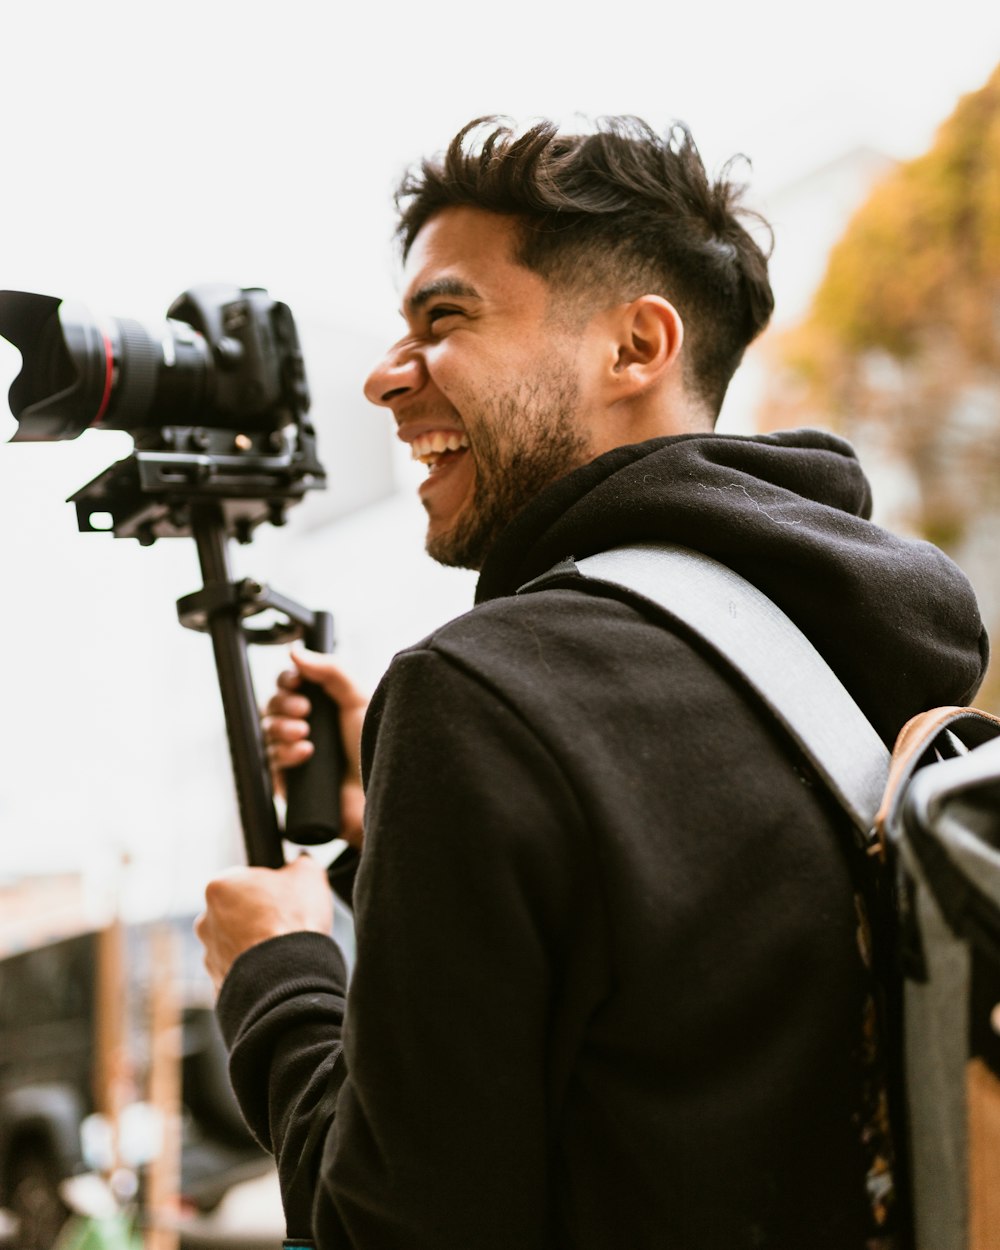 man smiling while holding DSLR camera